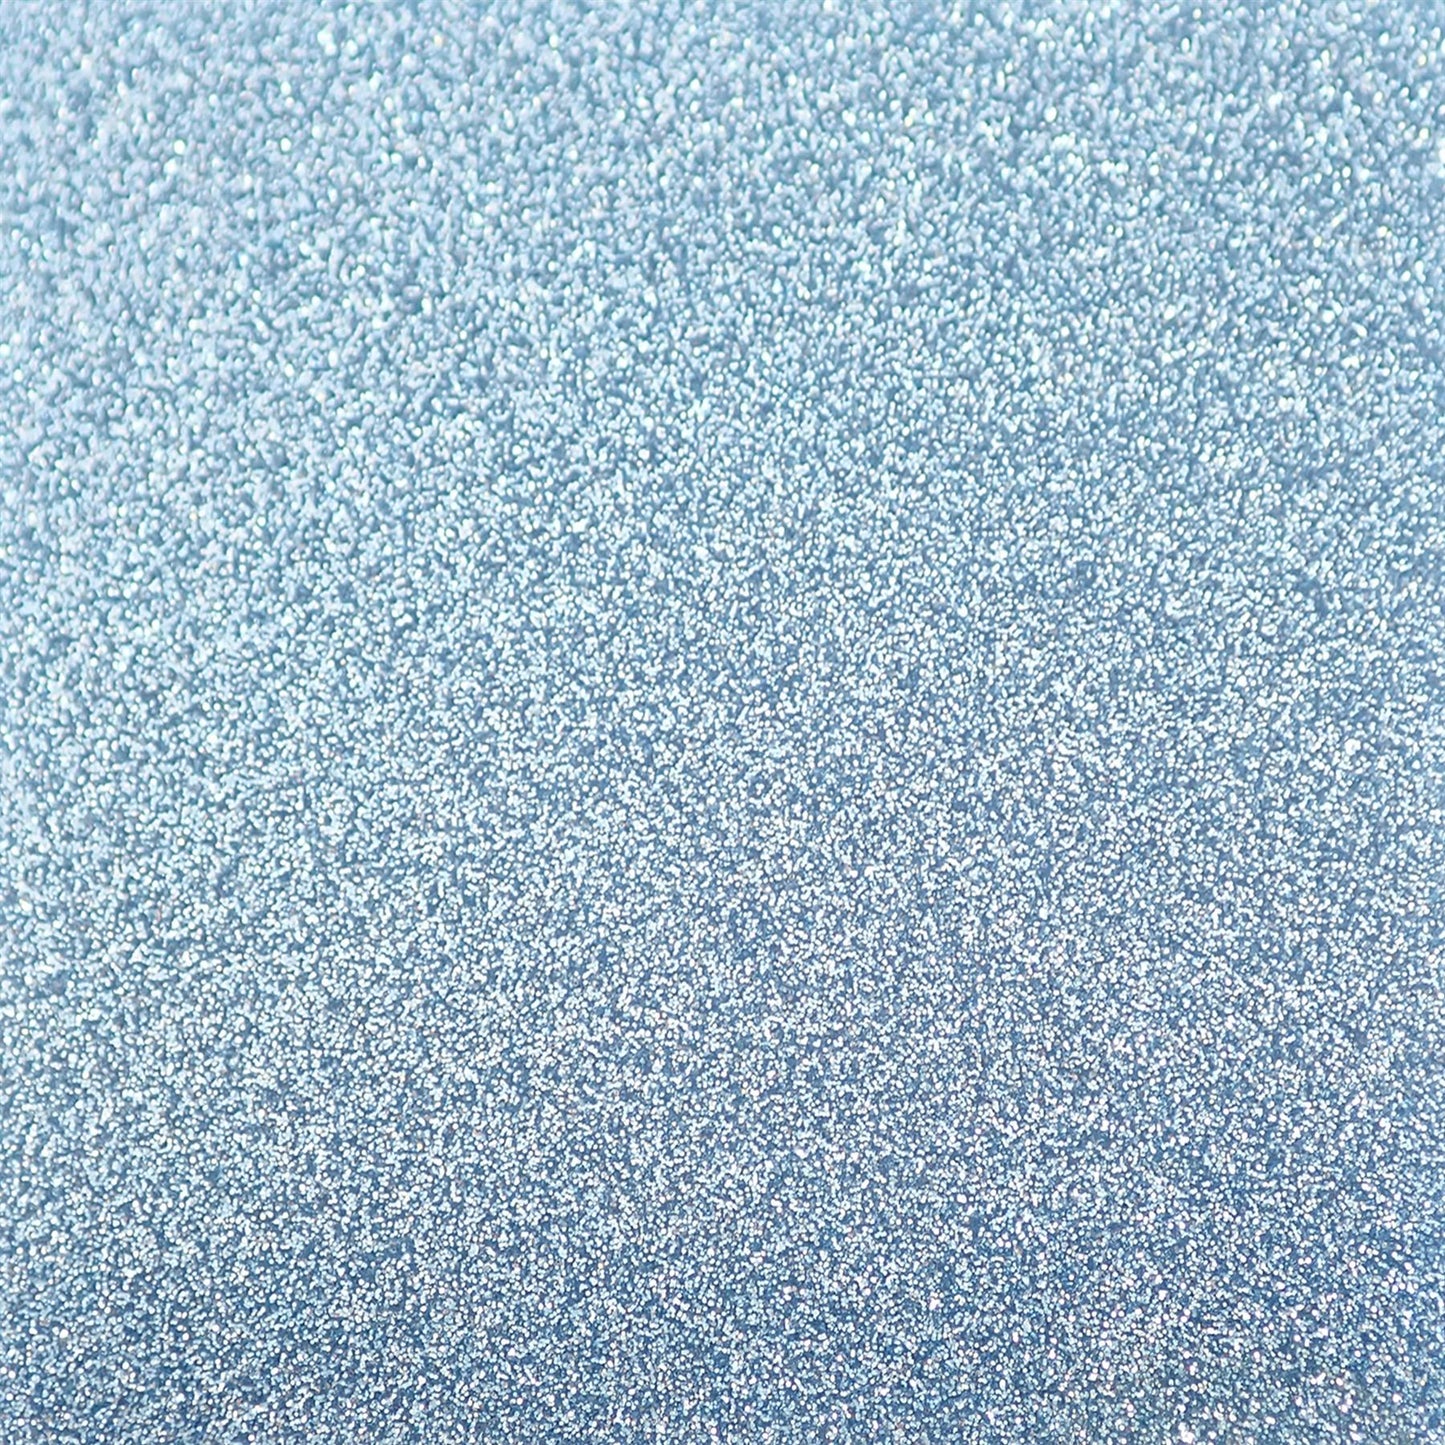 Incudo Baby Blue Glitter Acrylic Sheet - 150x125x3mm